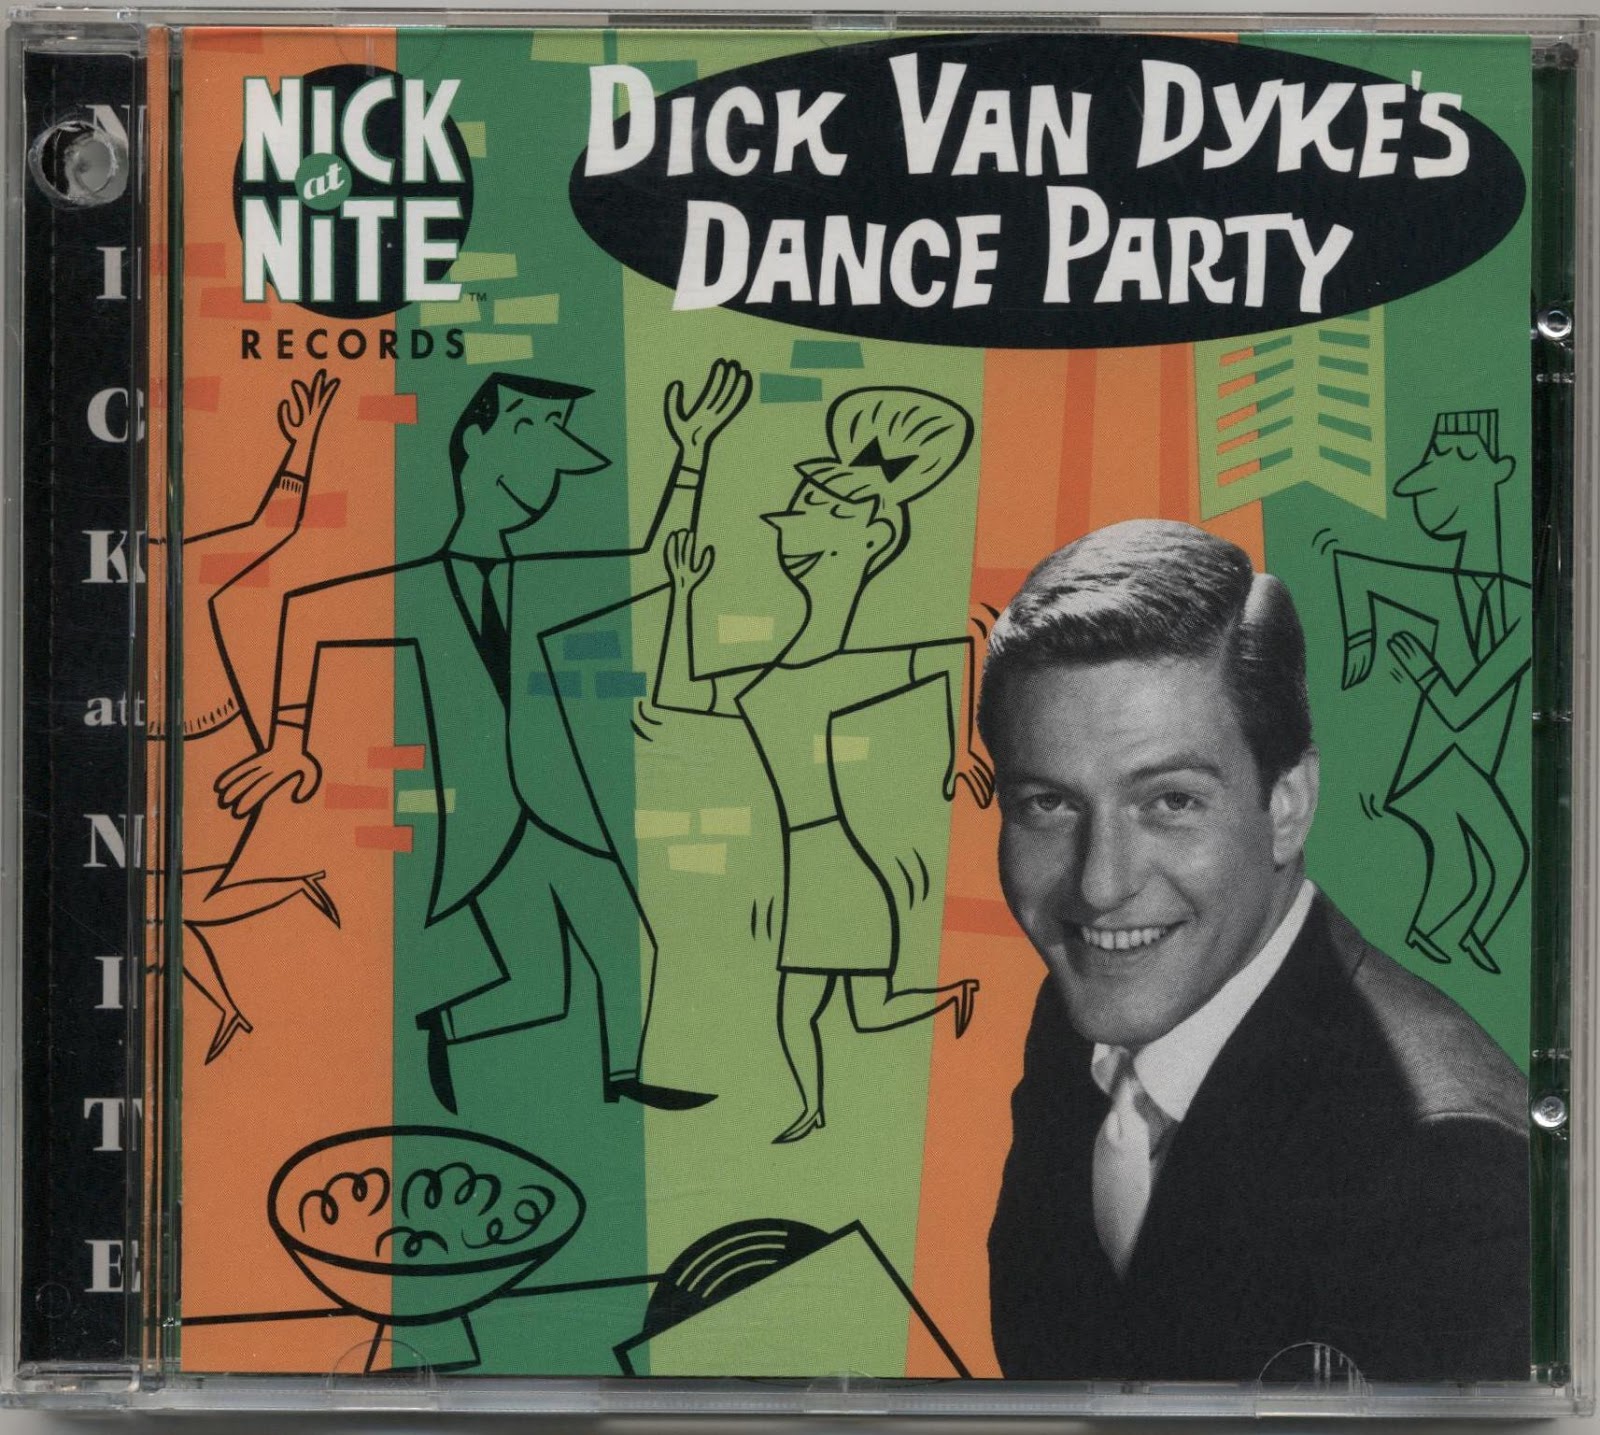 Dick van dyke youtube dancing